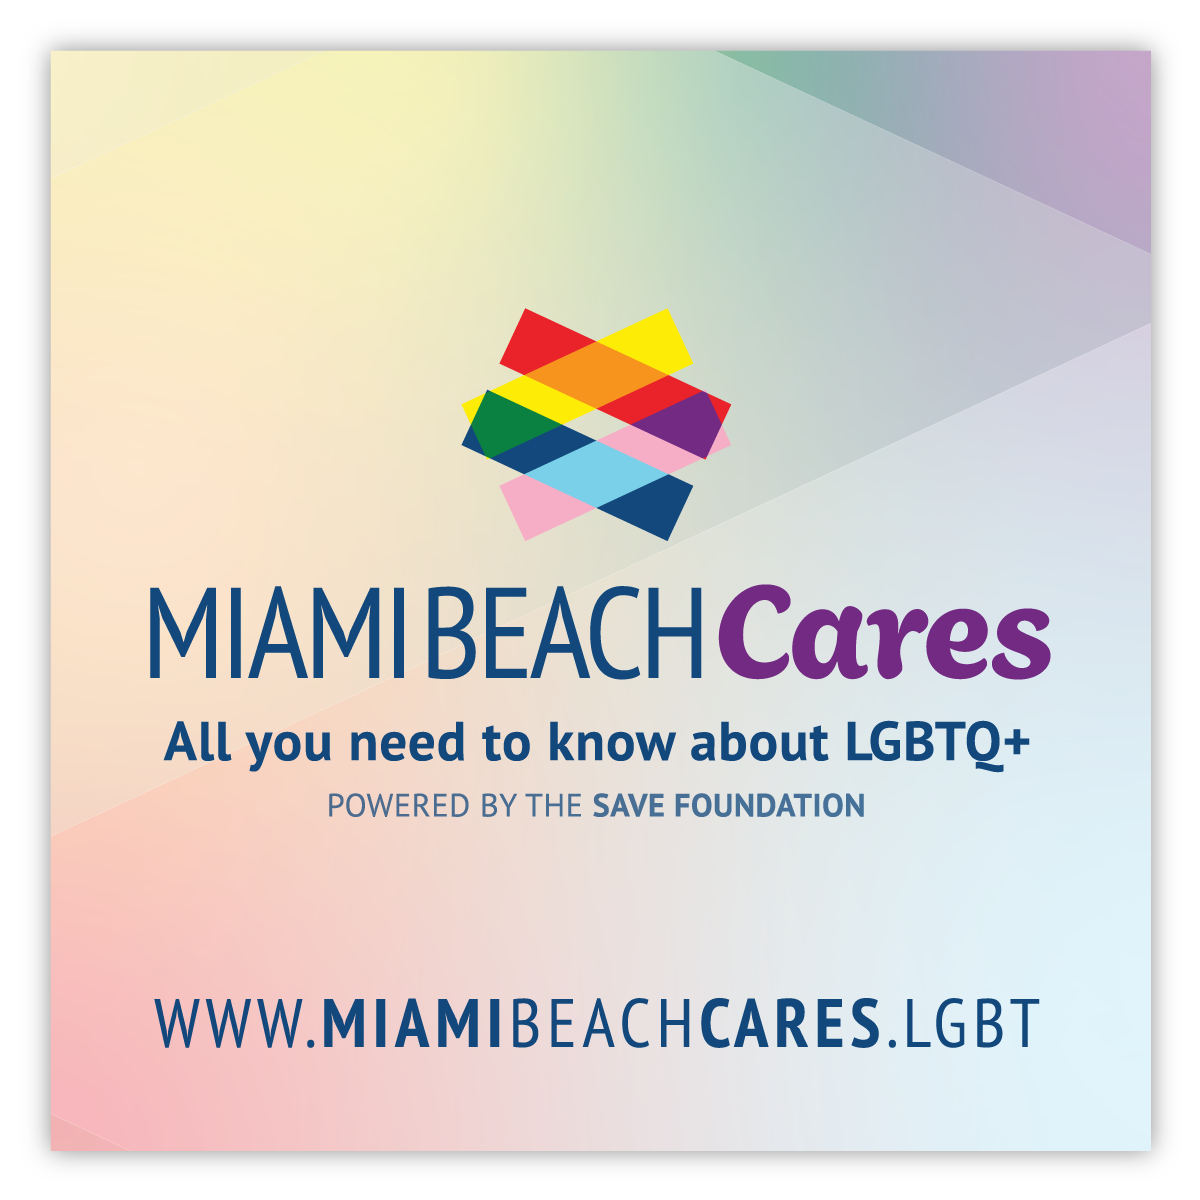 Miami Beach Cares